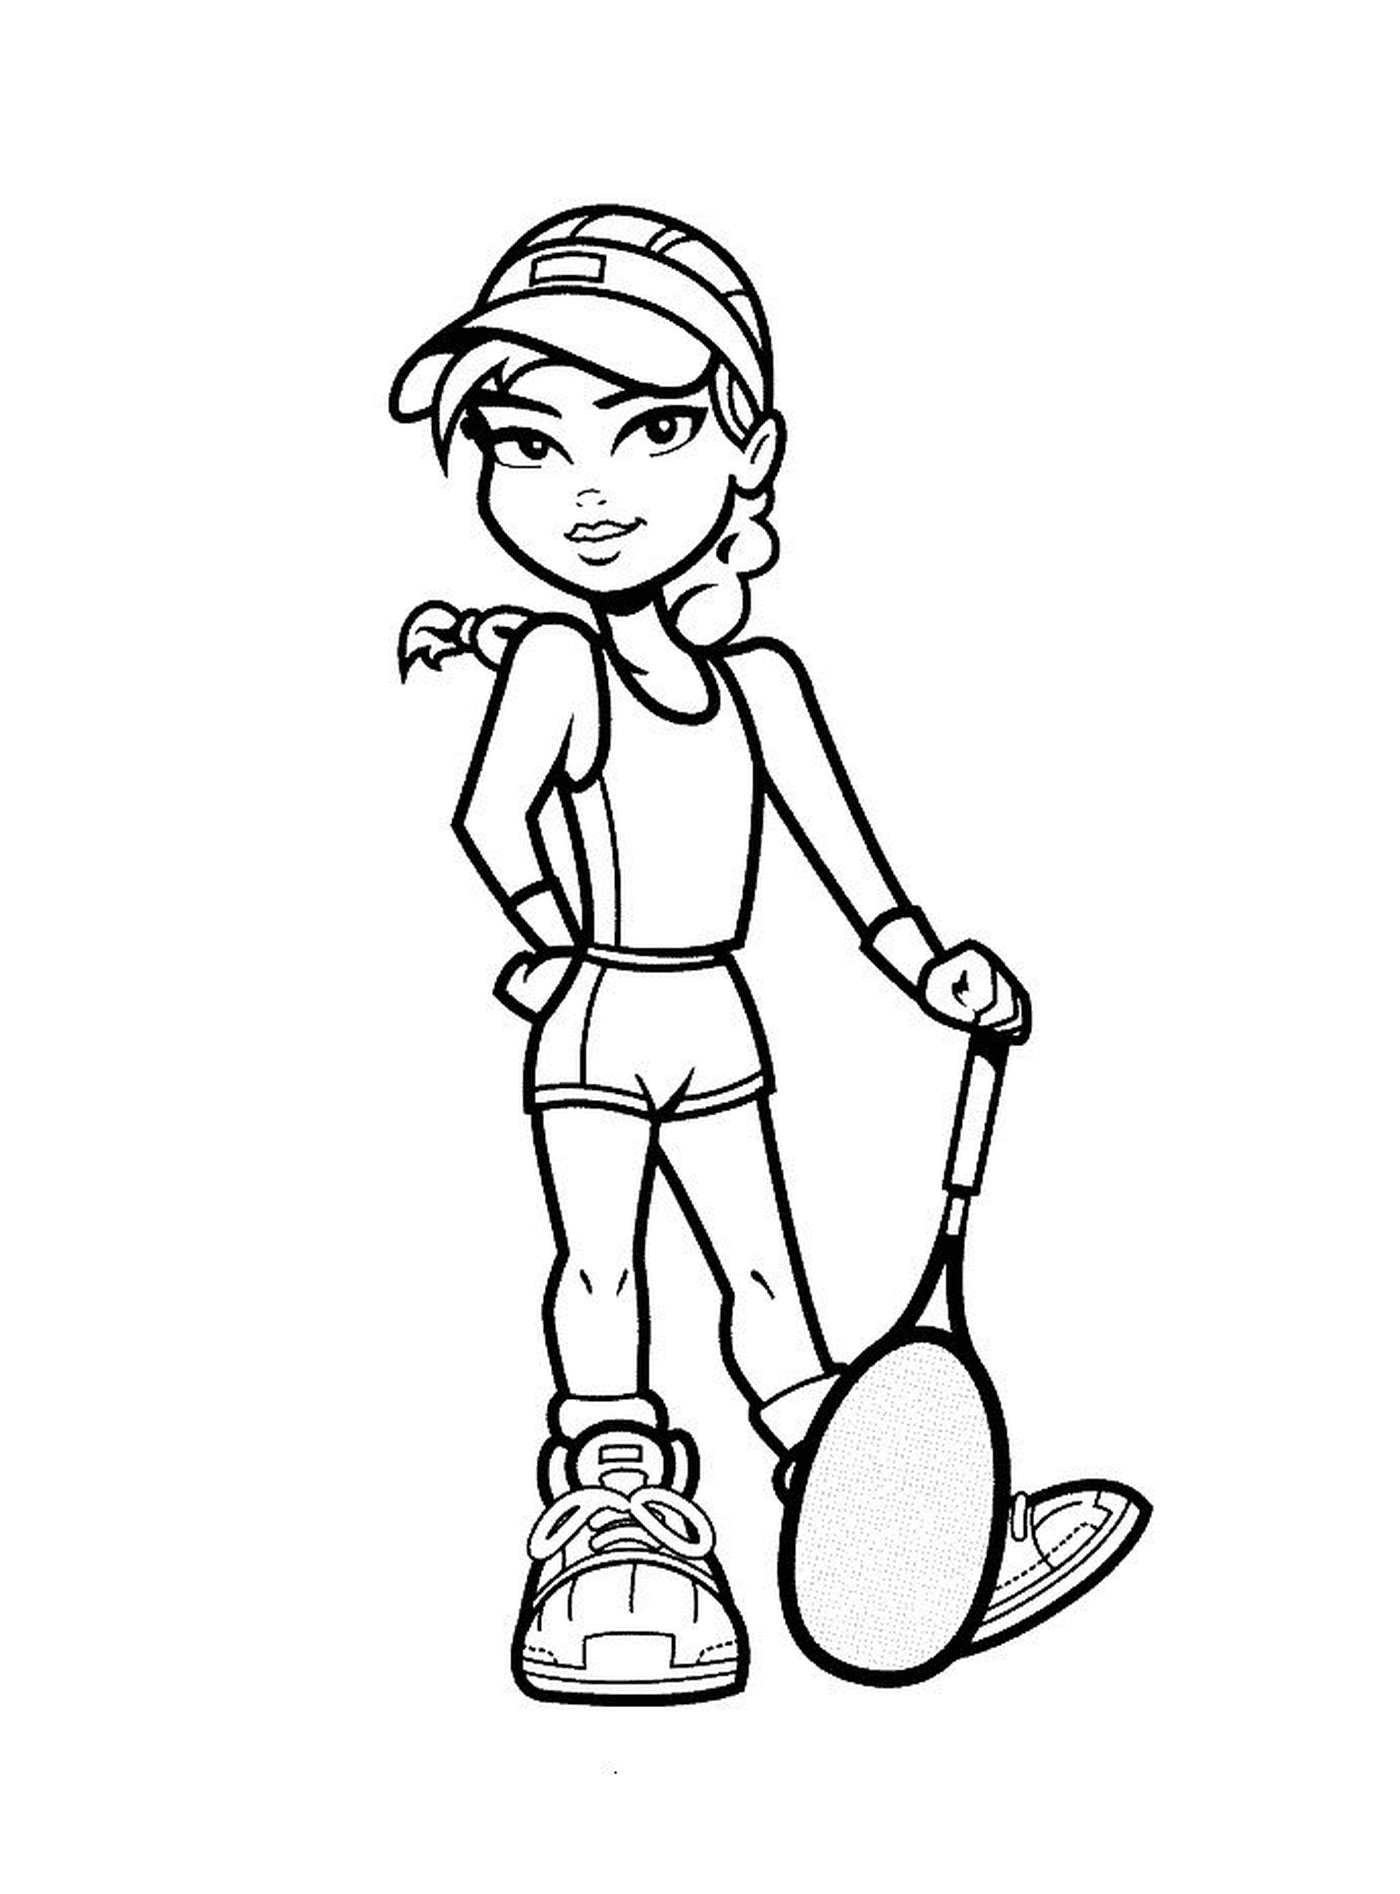  Sport, tennis, girl holding a snowshoe 